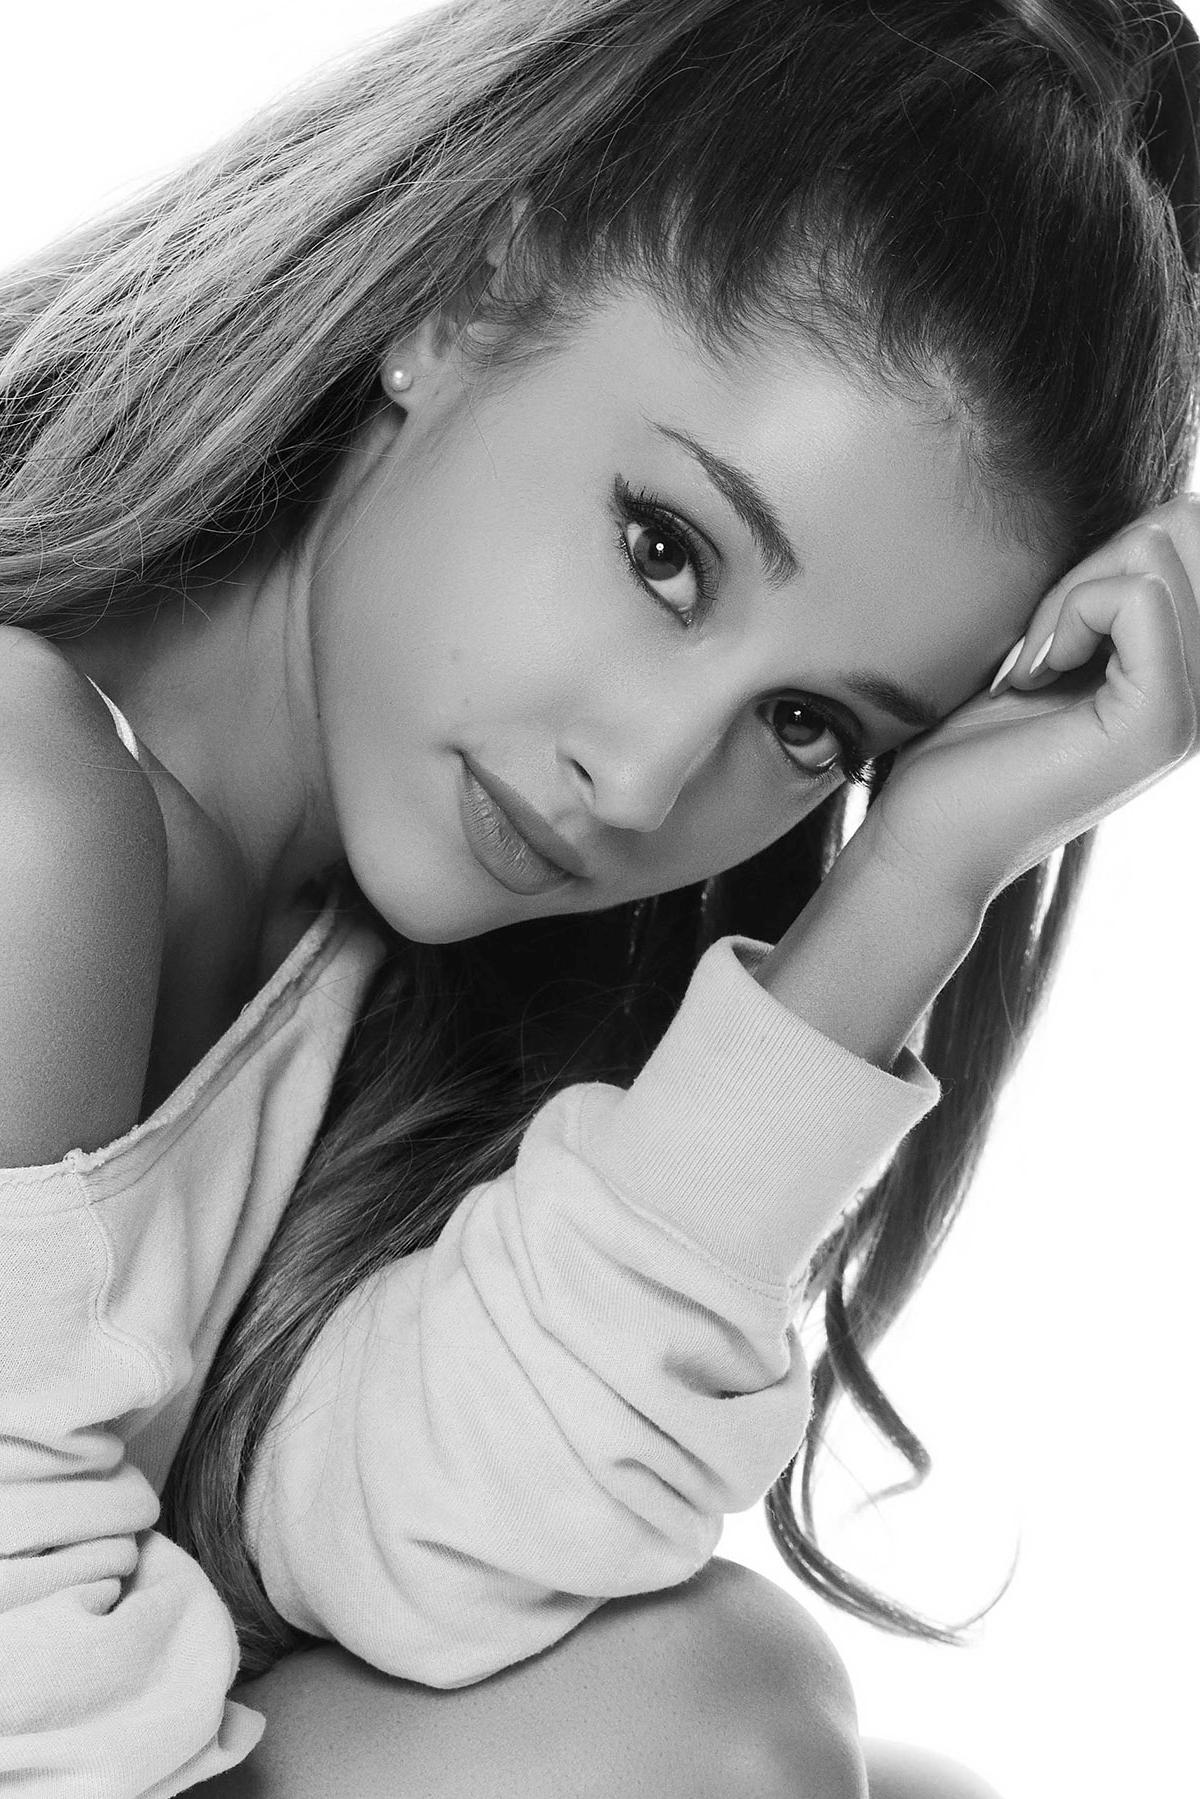 Ariana Grande Android Wallpaper Image 1200x1800